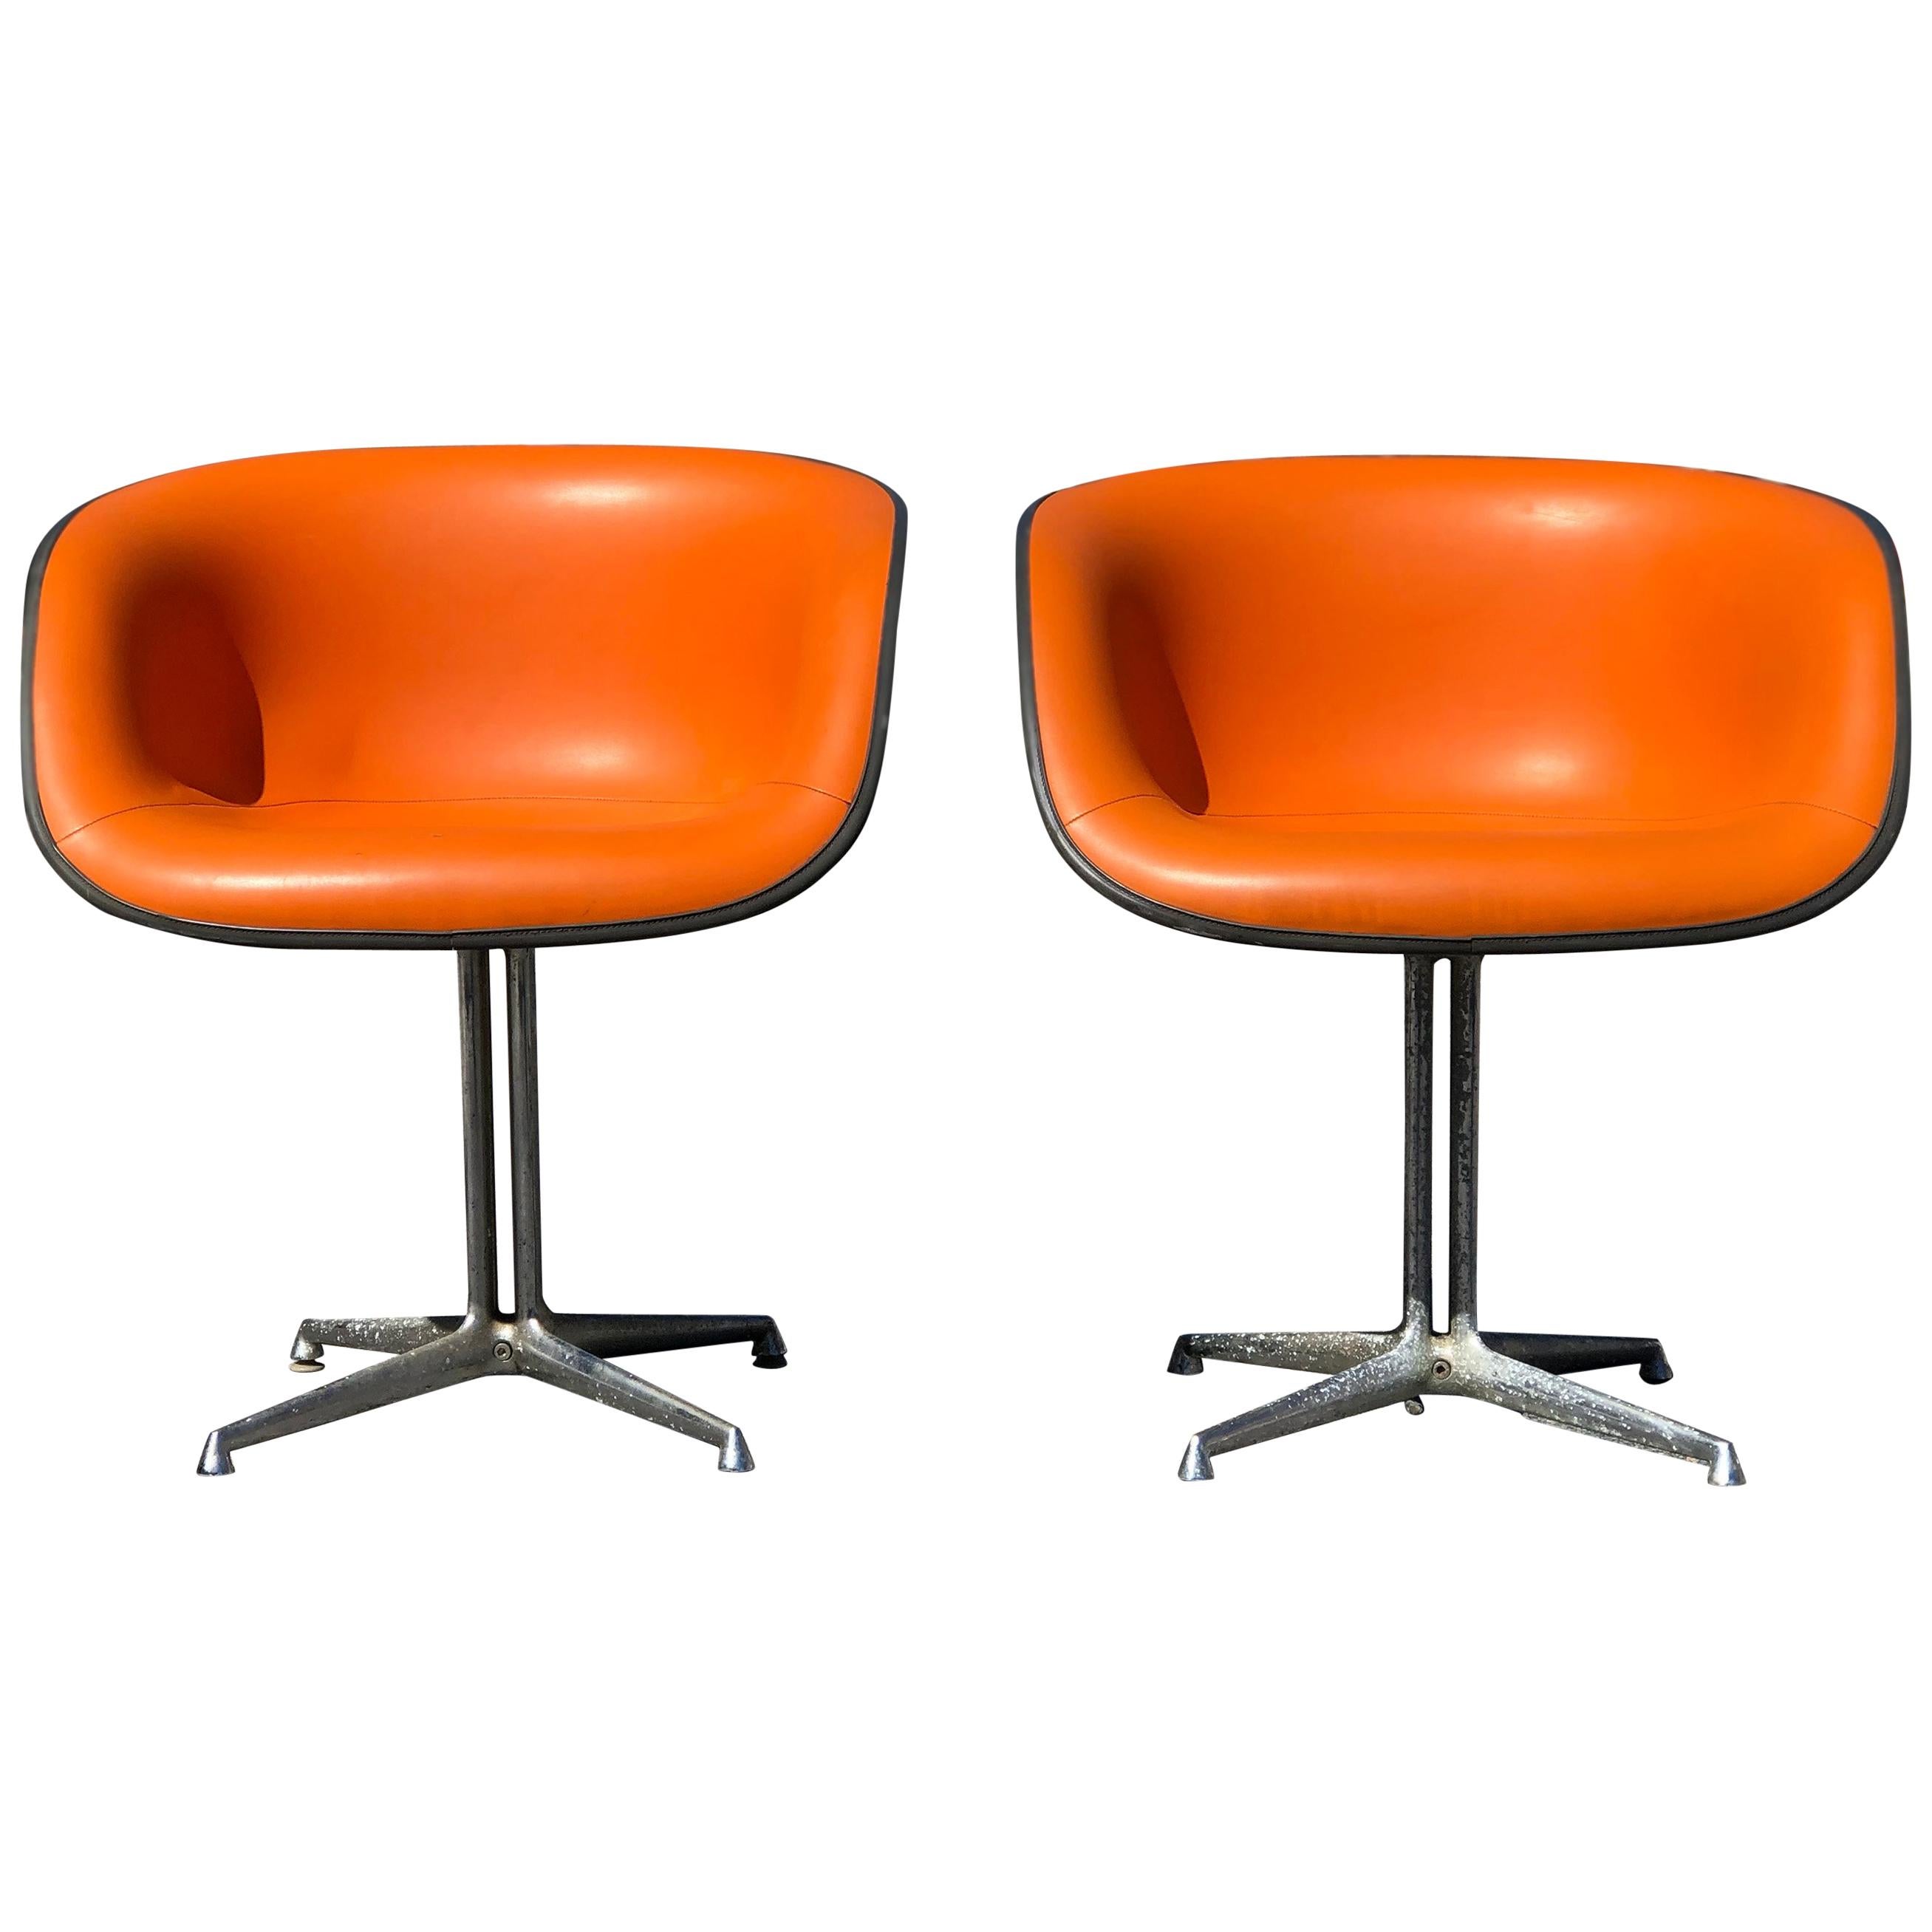 Pair of Tangerine Orange Eames La Fonda Chairs